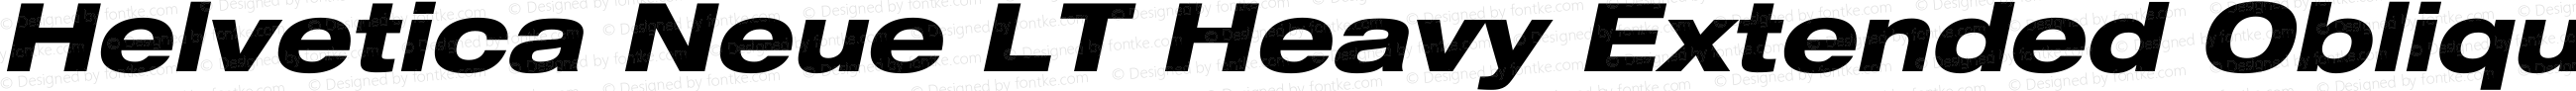 Helvetica Neue LT Heavy Extended Oblique